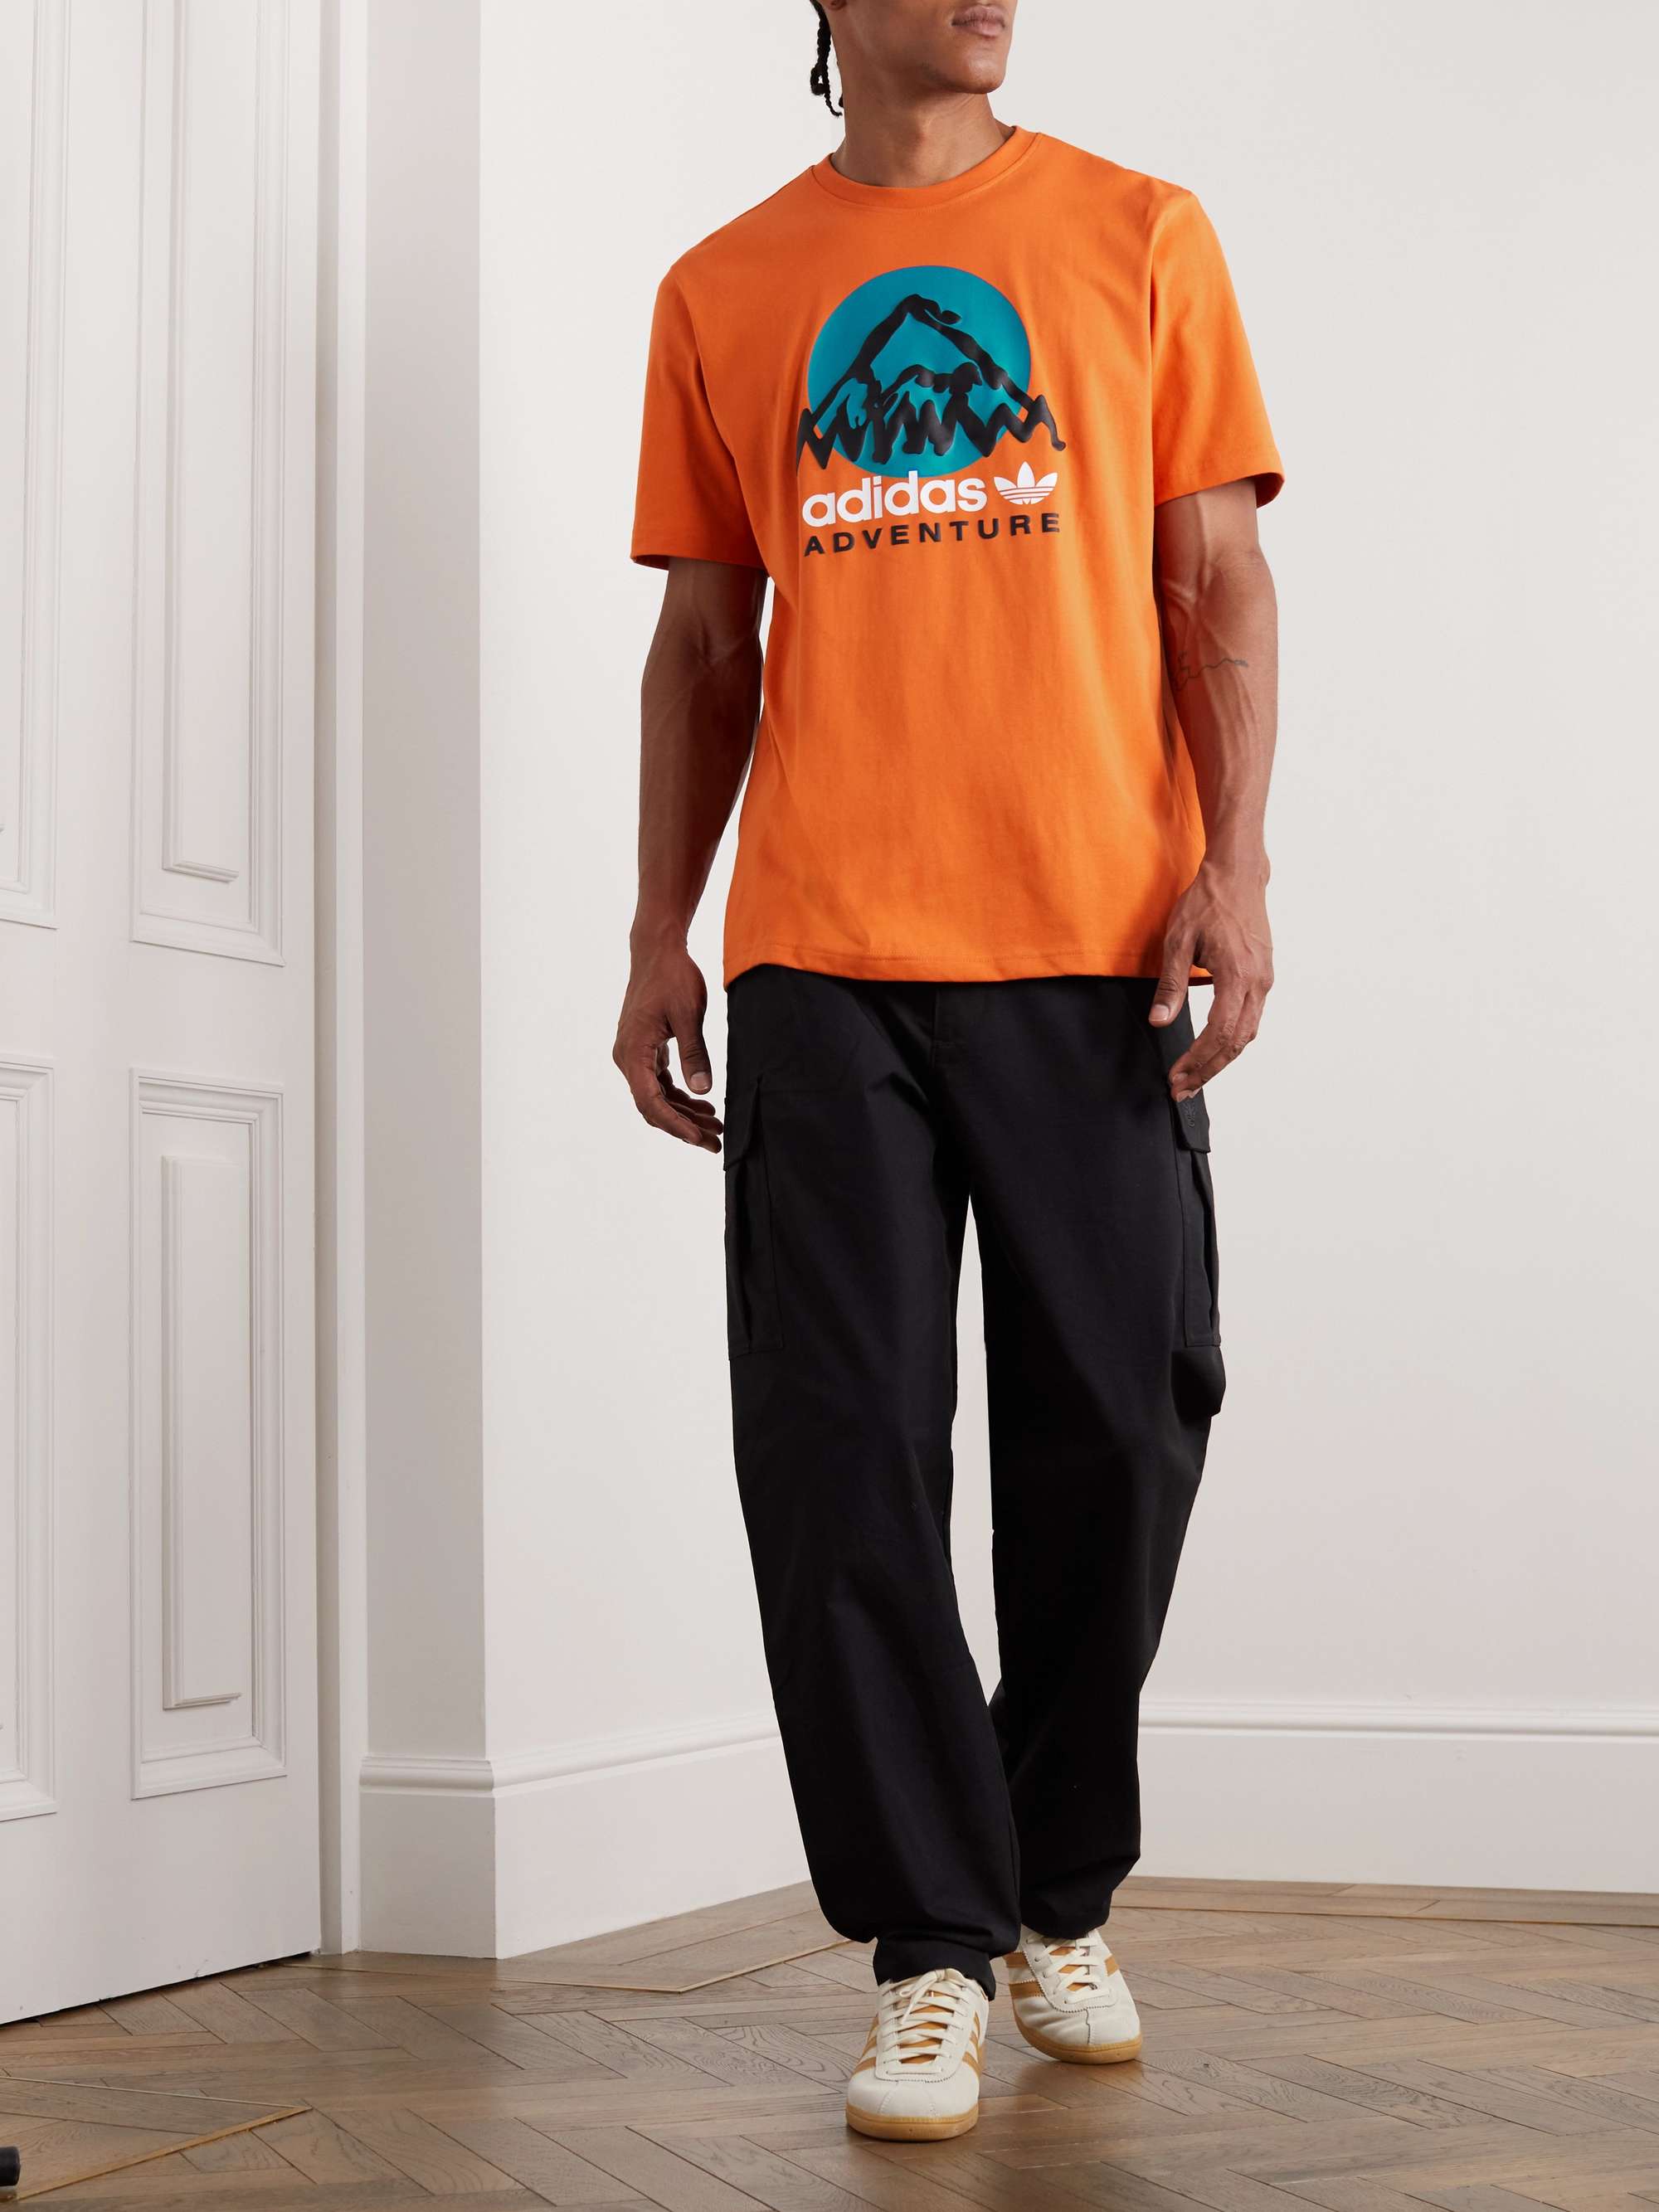 ADIDAS ORIGINALS Adventure Logo-Print Cotton-Jersey T-Shirt